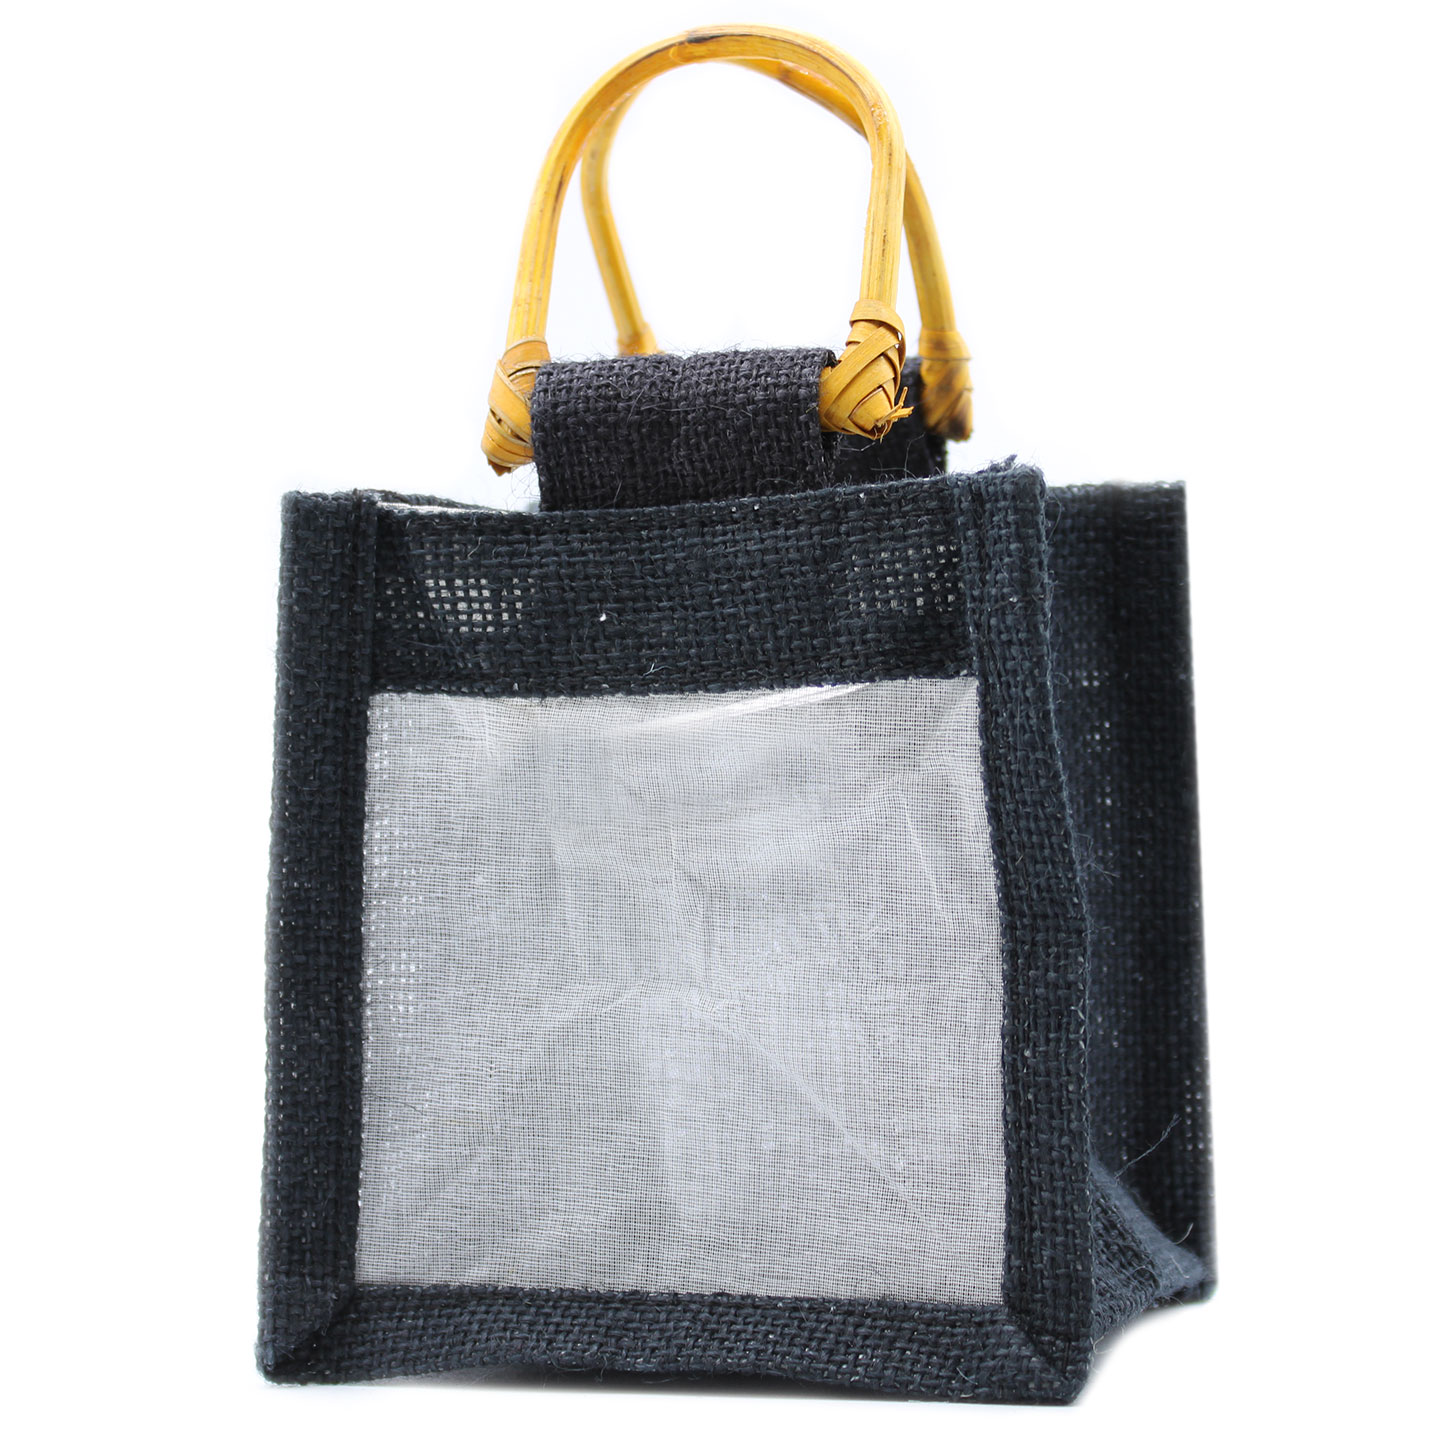 Dárková taška z juty a bavlny - Černá - 1 okénko